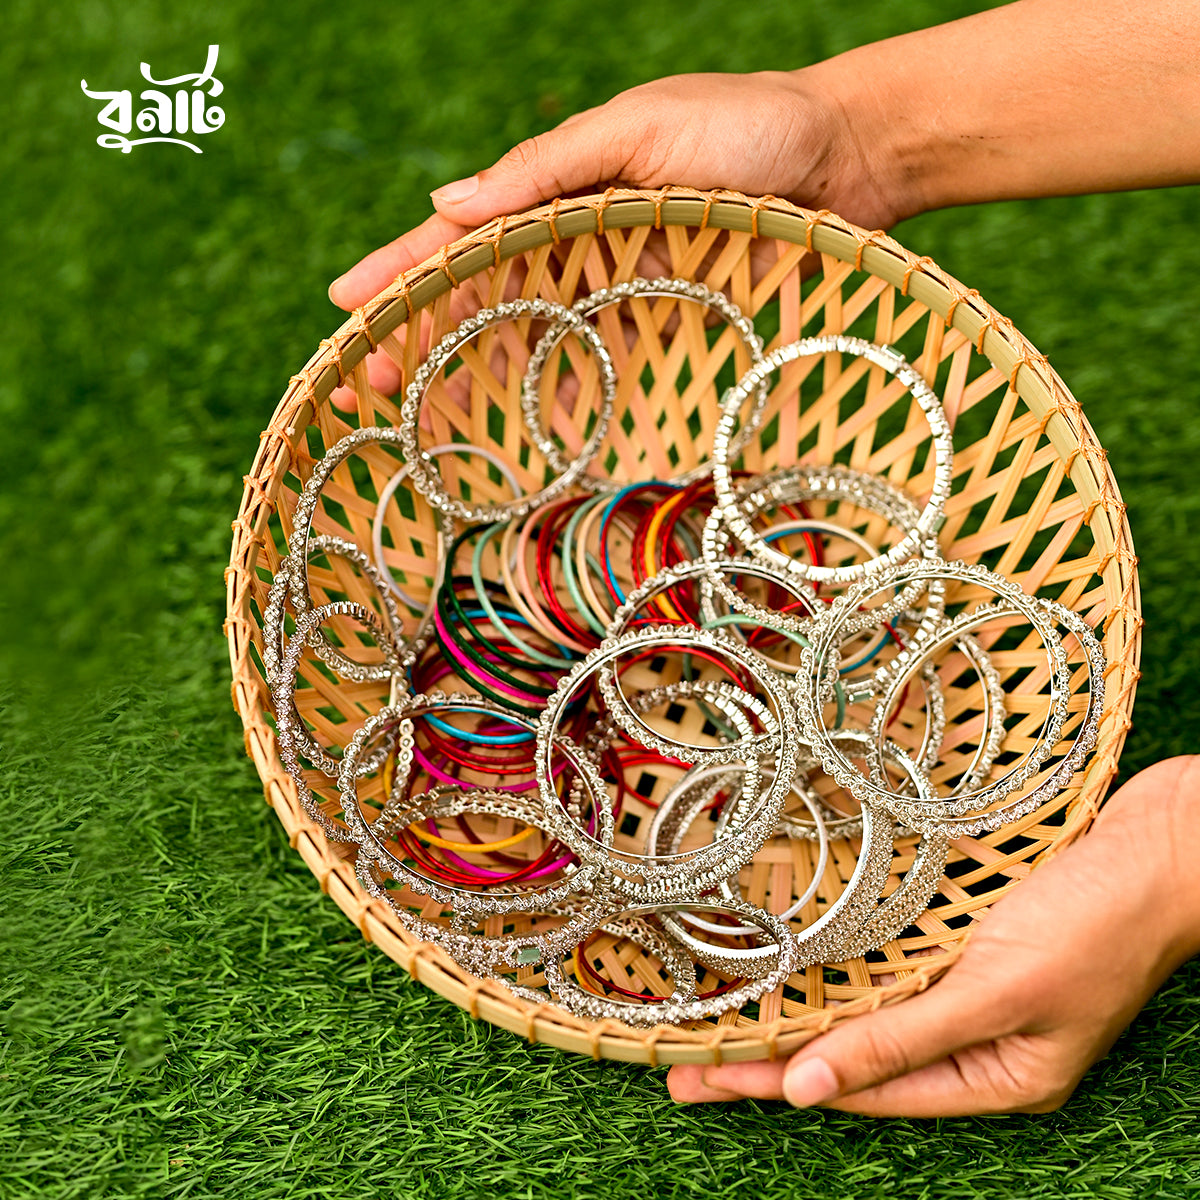 Bamboo Jewelry Basket